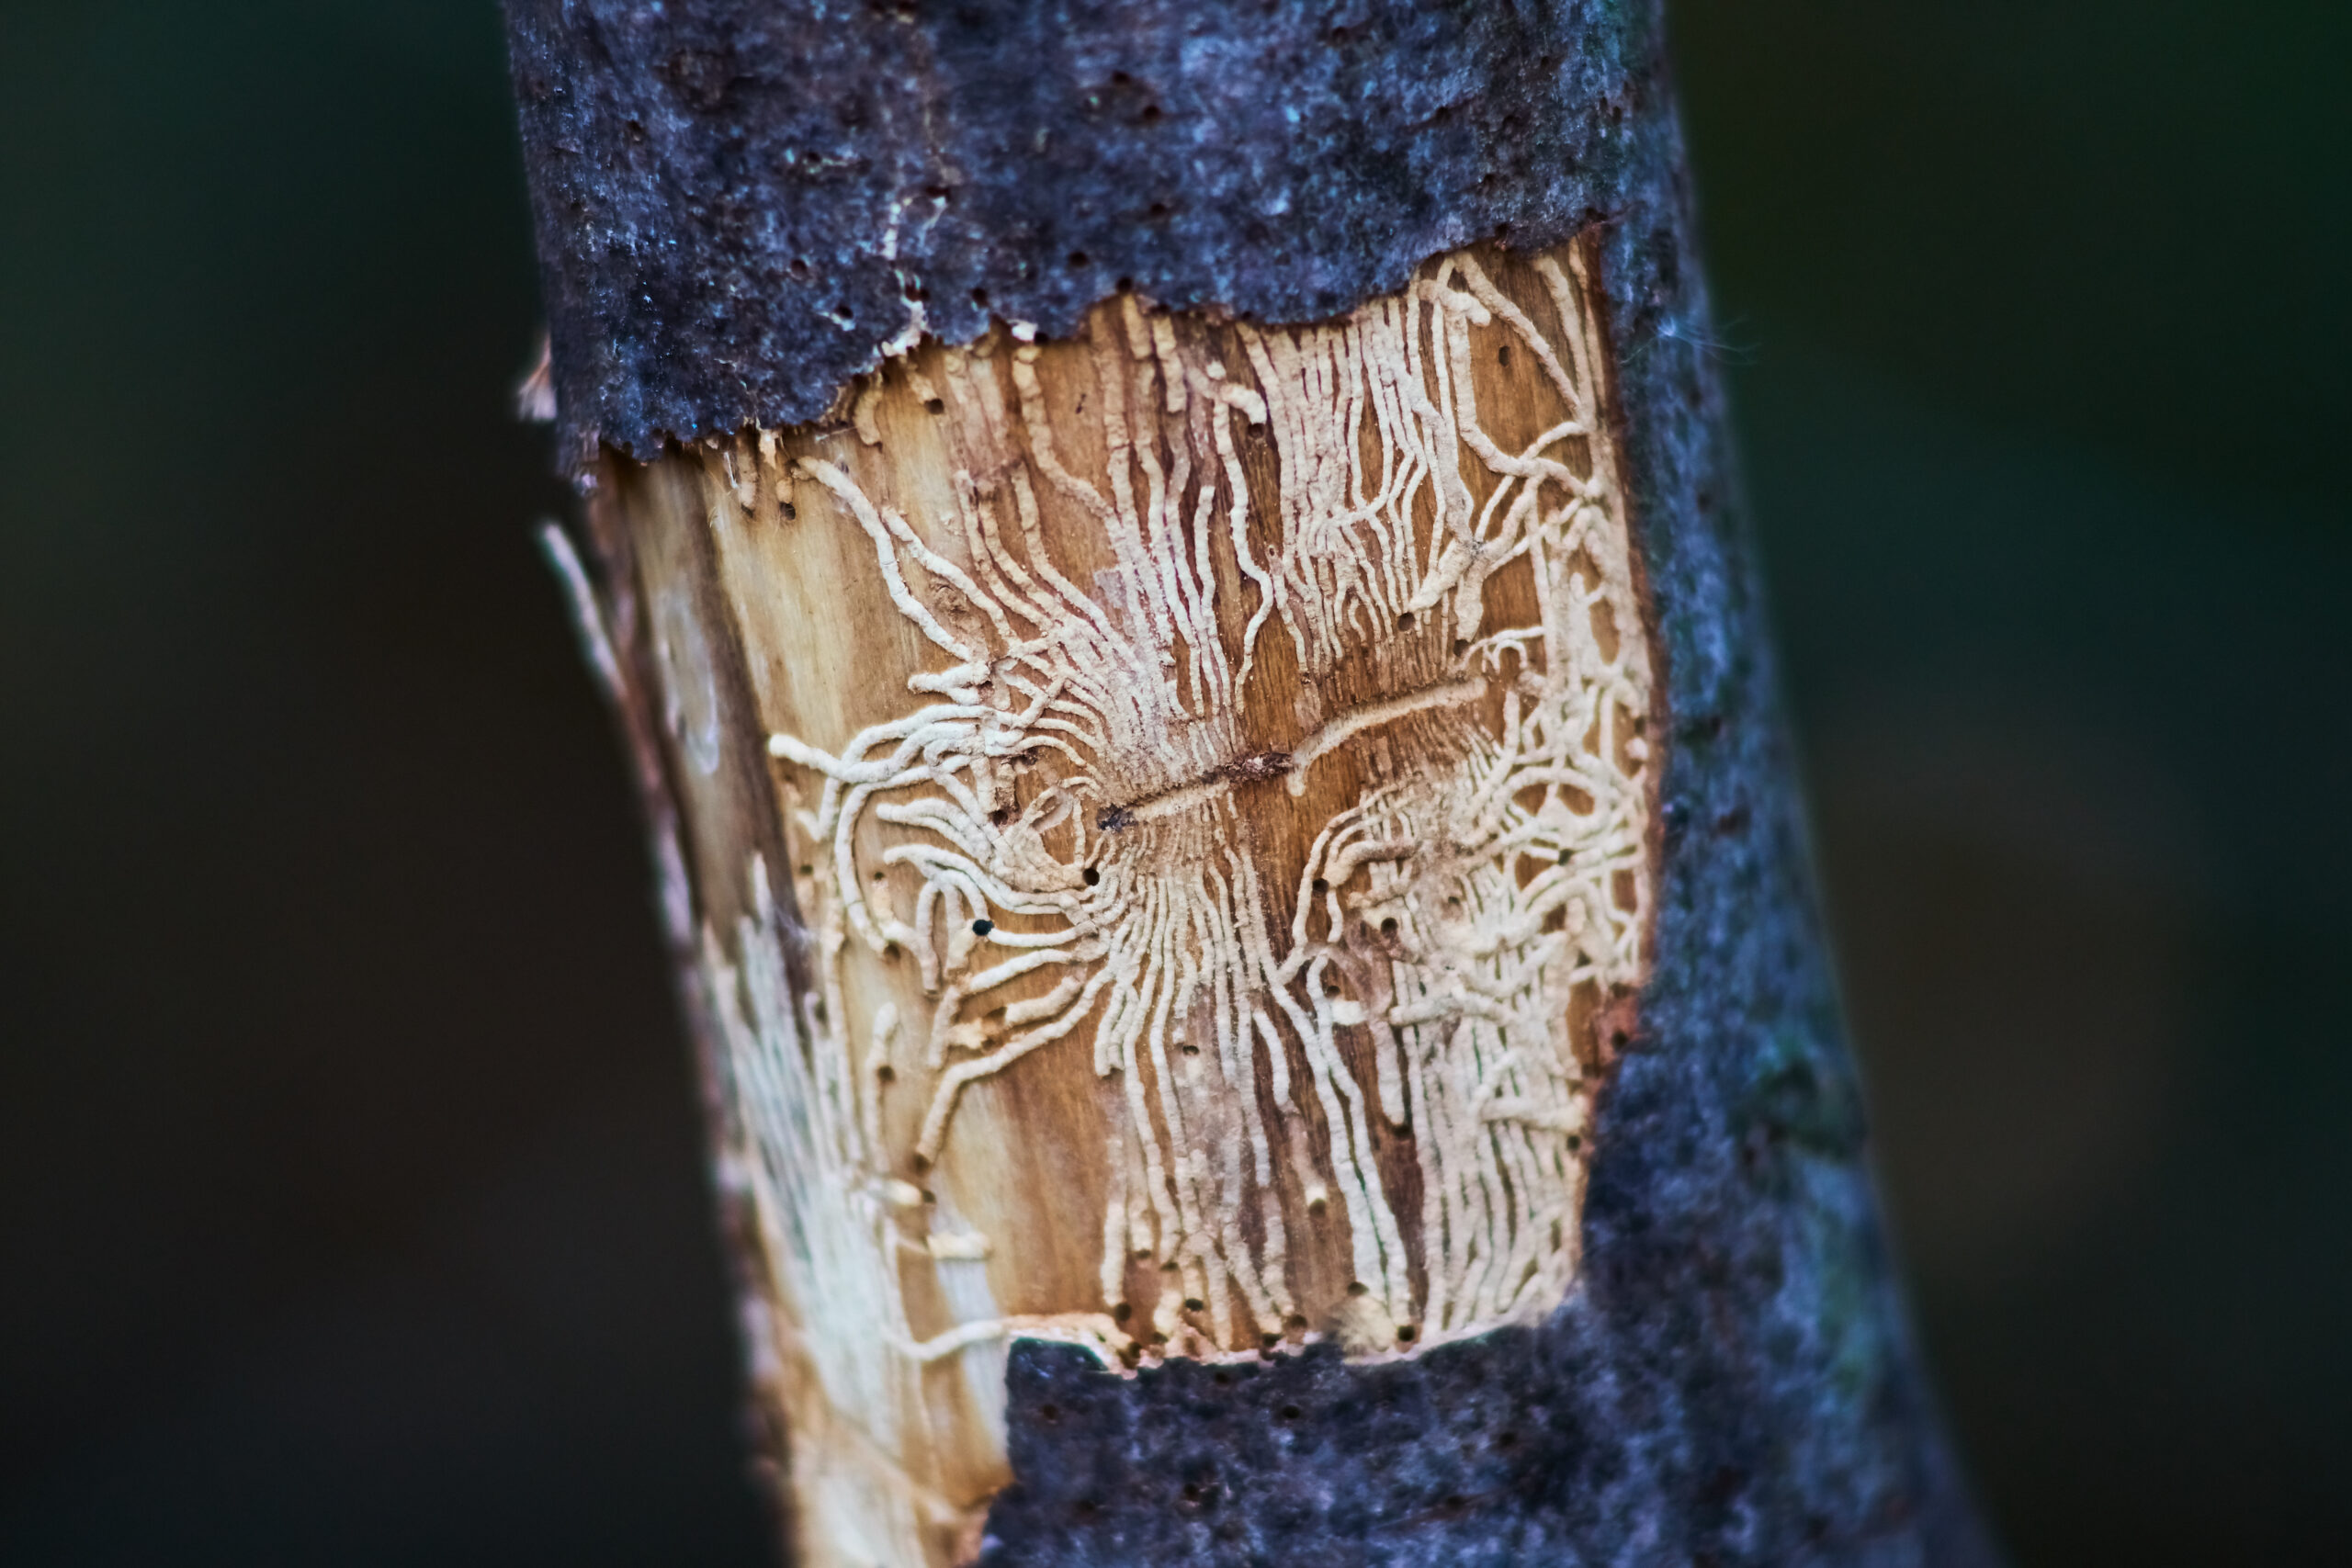 Beetles - European spruce bark beetle